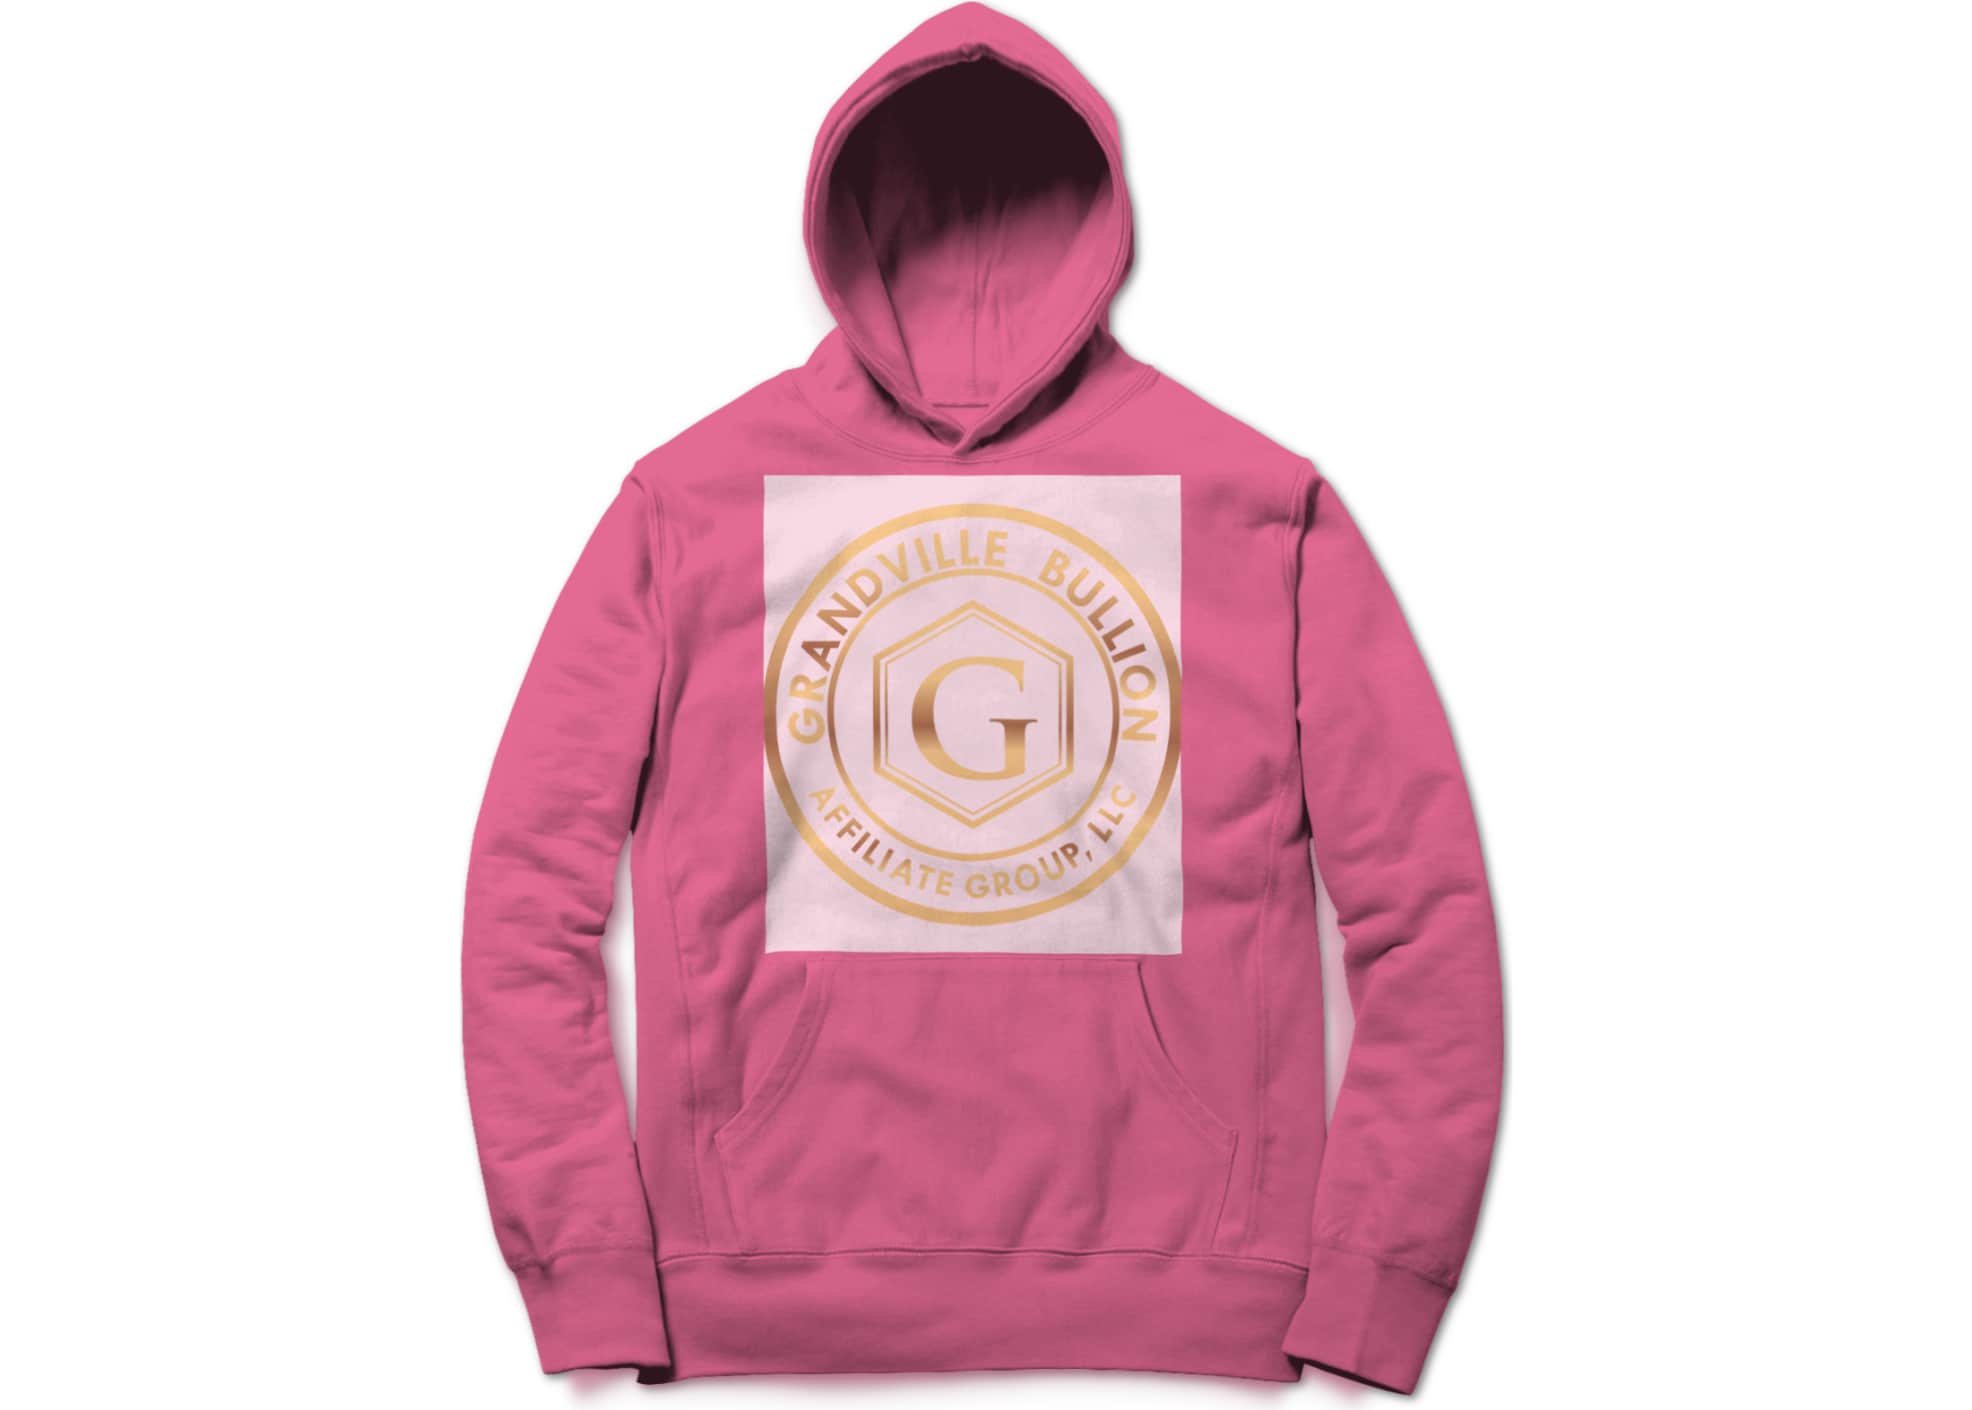 Grandville bullion group llc pink and gold  1629989663